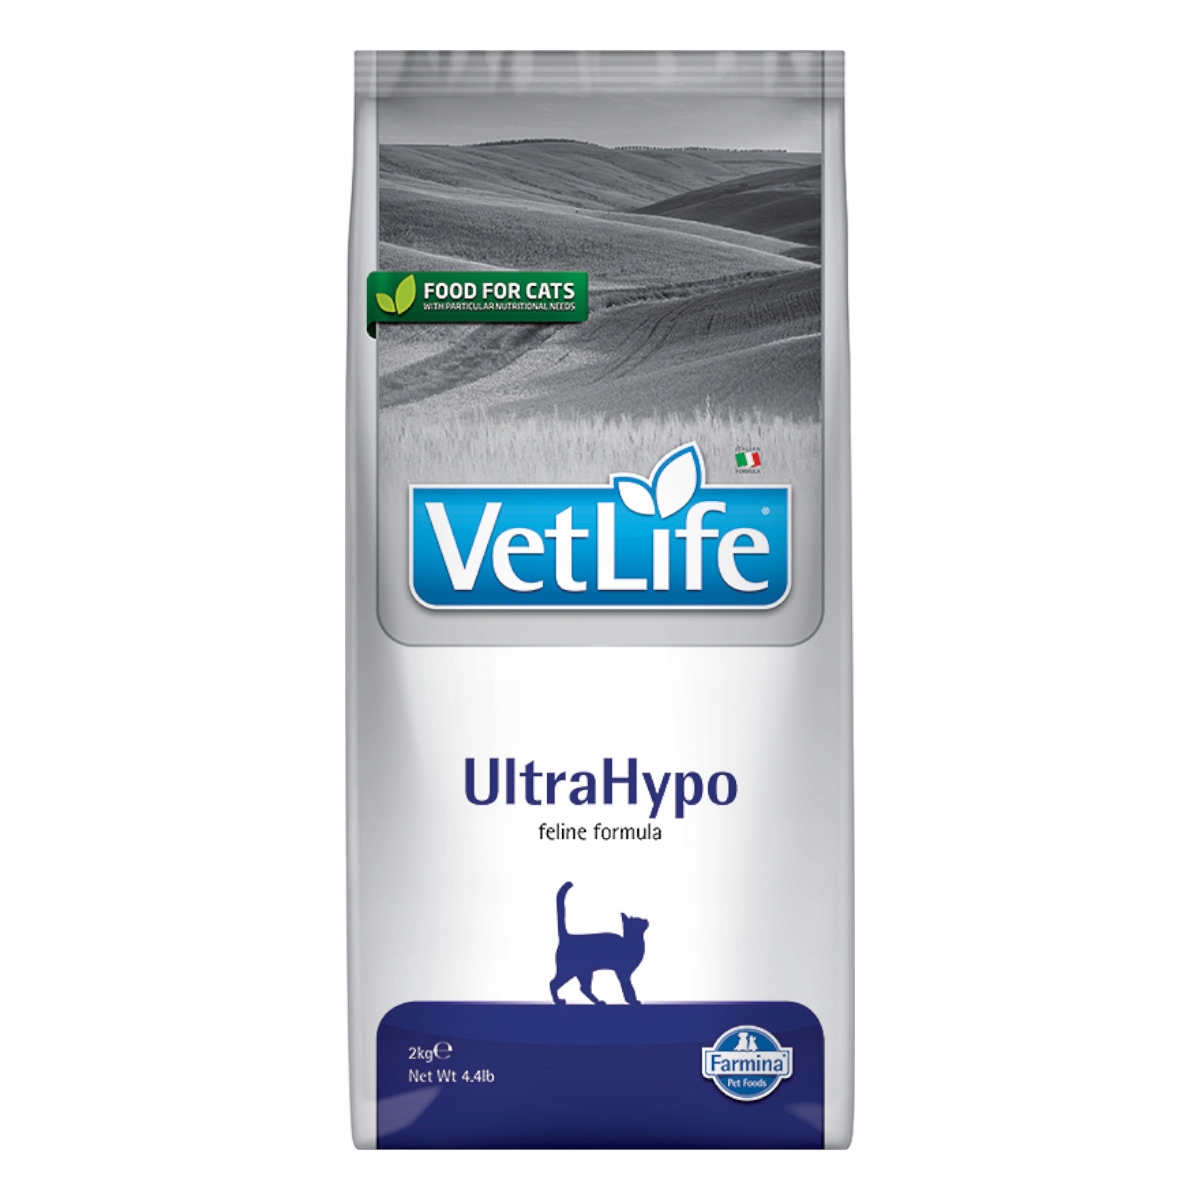 Vet life ultrahypo для собак. Фармина ультрагипо для собак. Farmina vet Life ULTRAHYPO. Ветлайф корм для собак. Фармина obesity для собак.